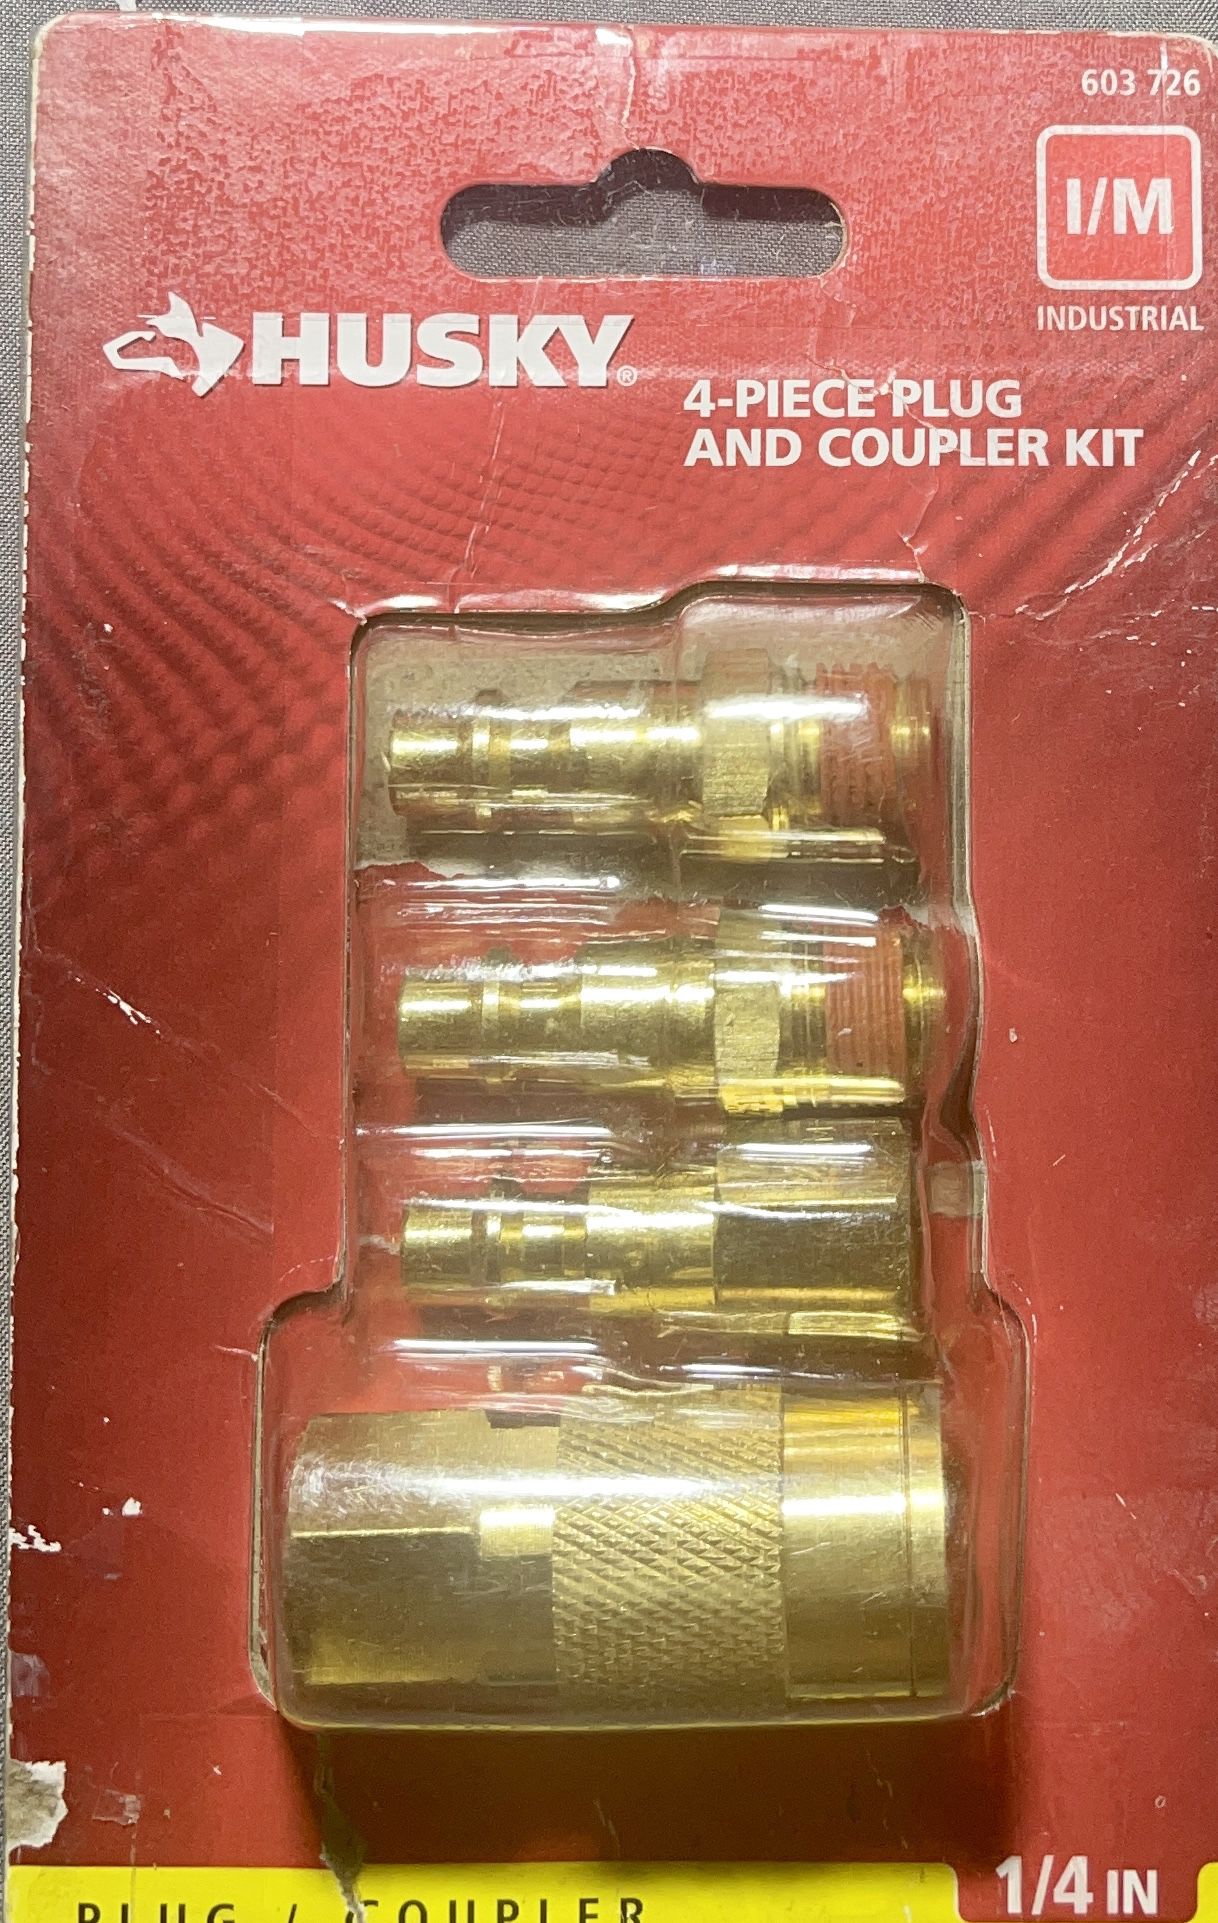 Husky (603 726) 1/4” Industrial NPT Plug and Coupler Kit (4-Piece)